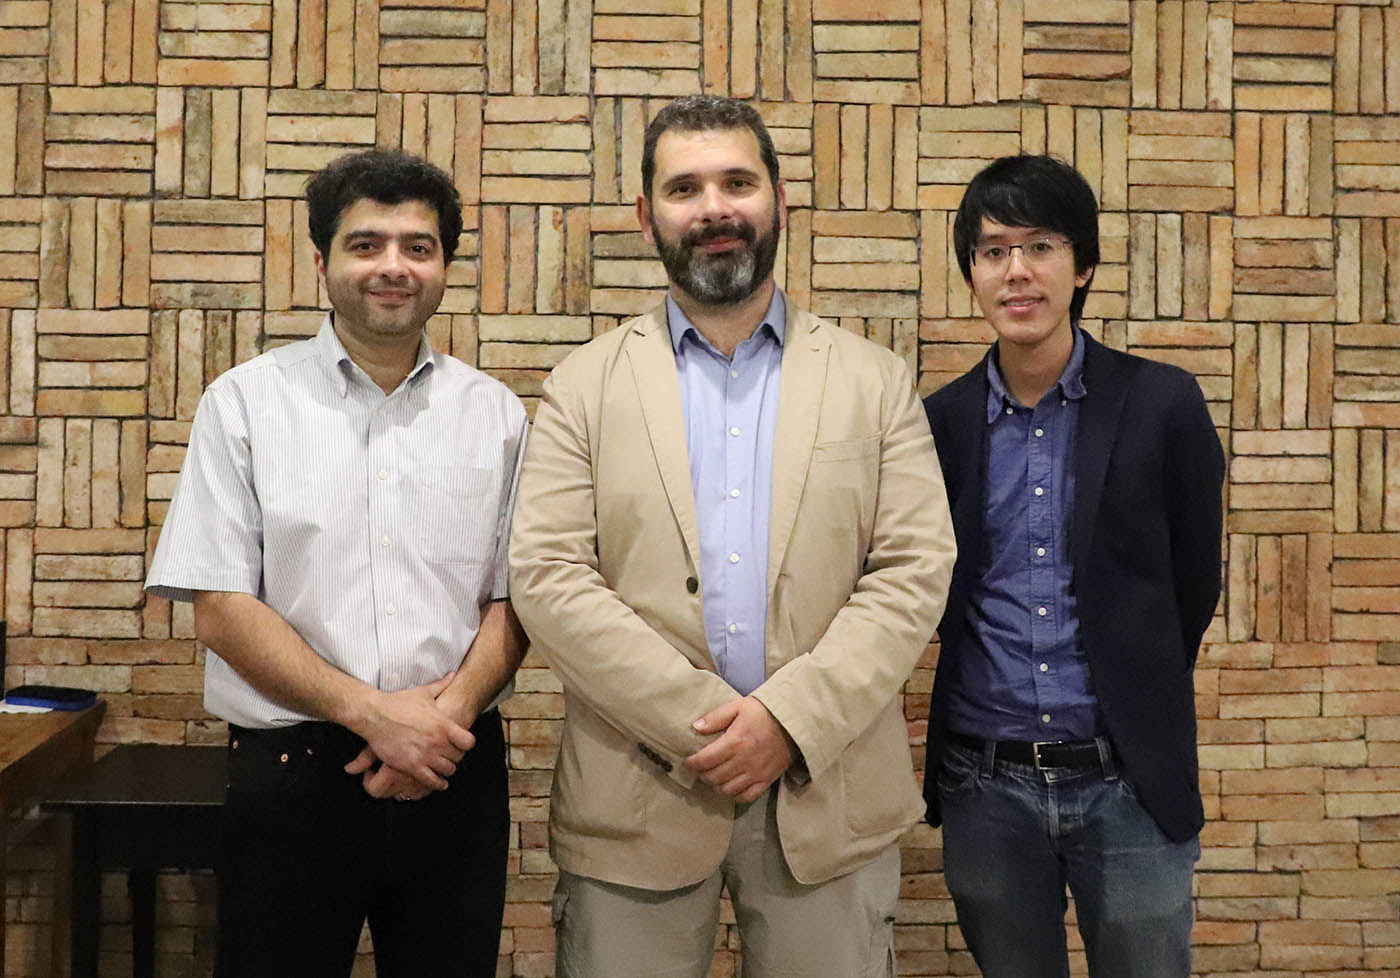 Pictured left to right Pedram Roushan, Dimitris Angelakis and Jirawat Tangpanitanon 